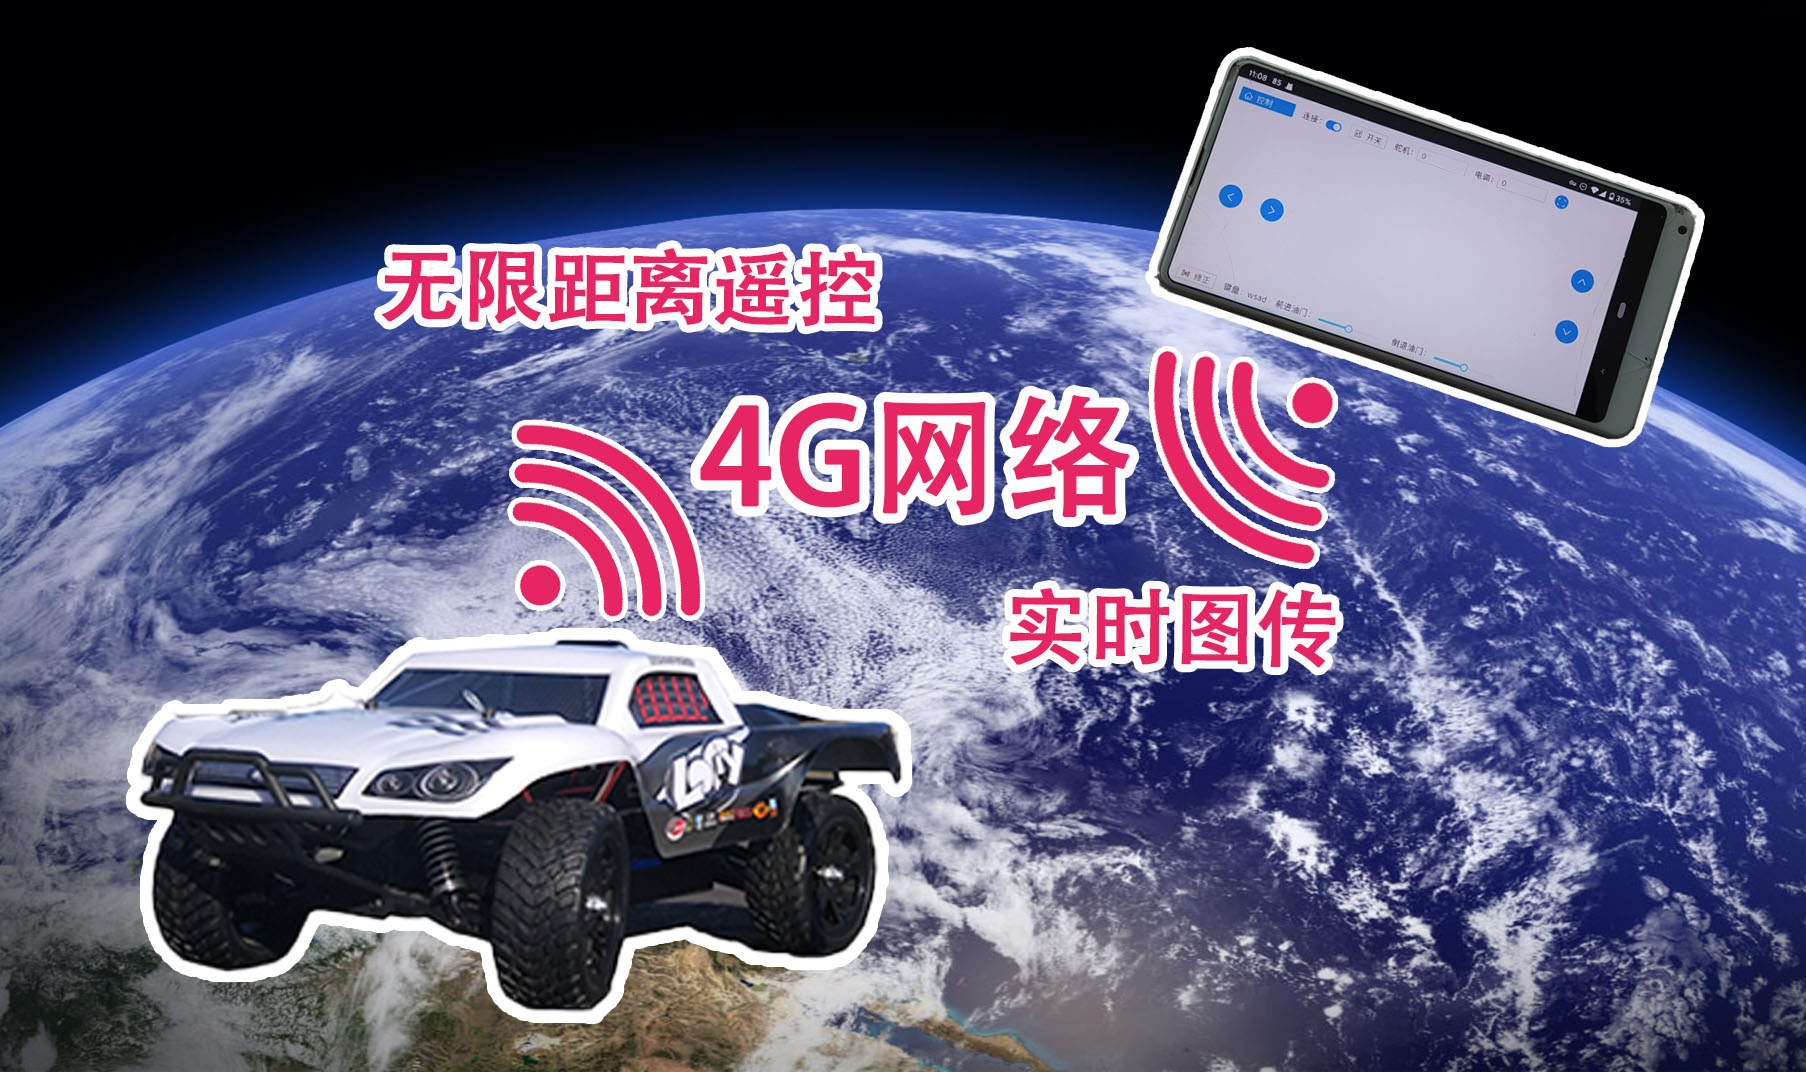 4G 网络 RC 遥控车03 - 无限距离远程遥控？